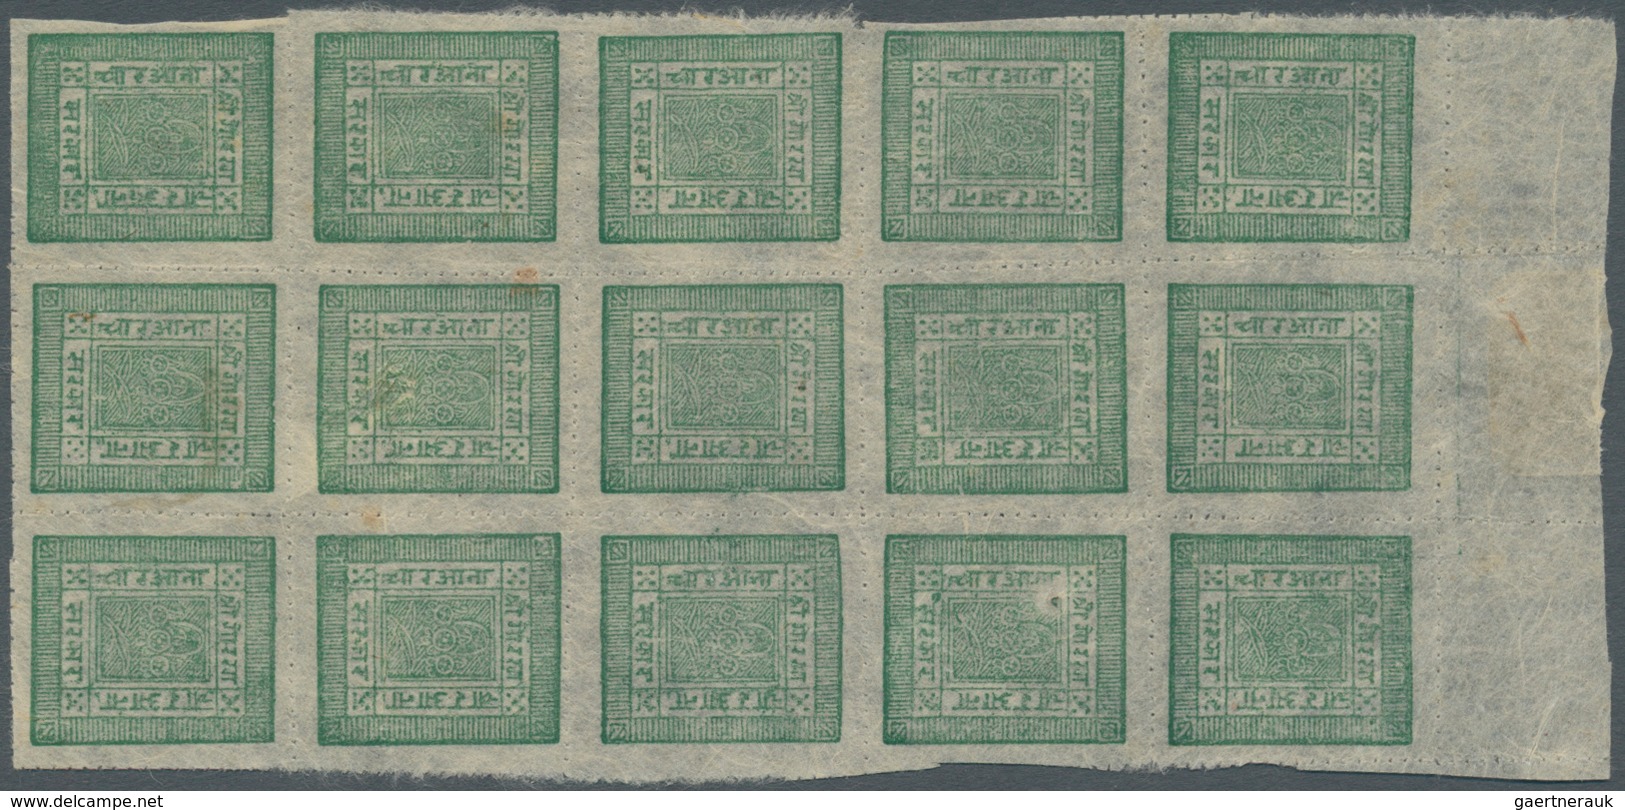 Nepal: 1898/1917, 4a Dull Green Pin-perf, Unused Upper Margin Block Of 15. Some Scissor Separation C - Nepal